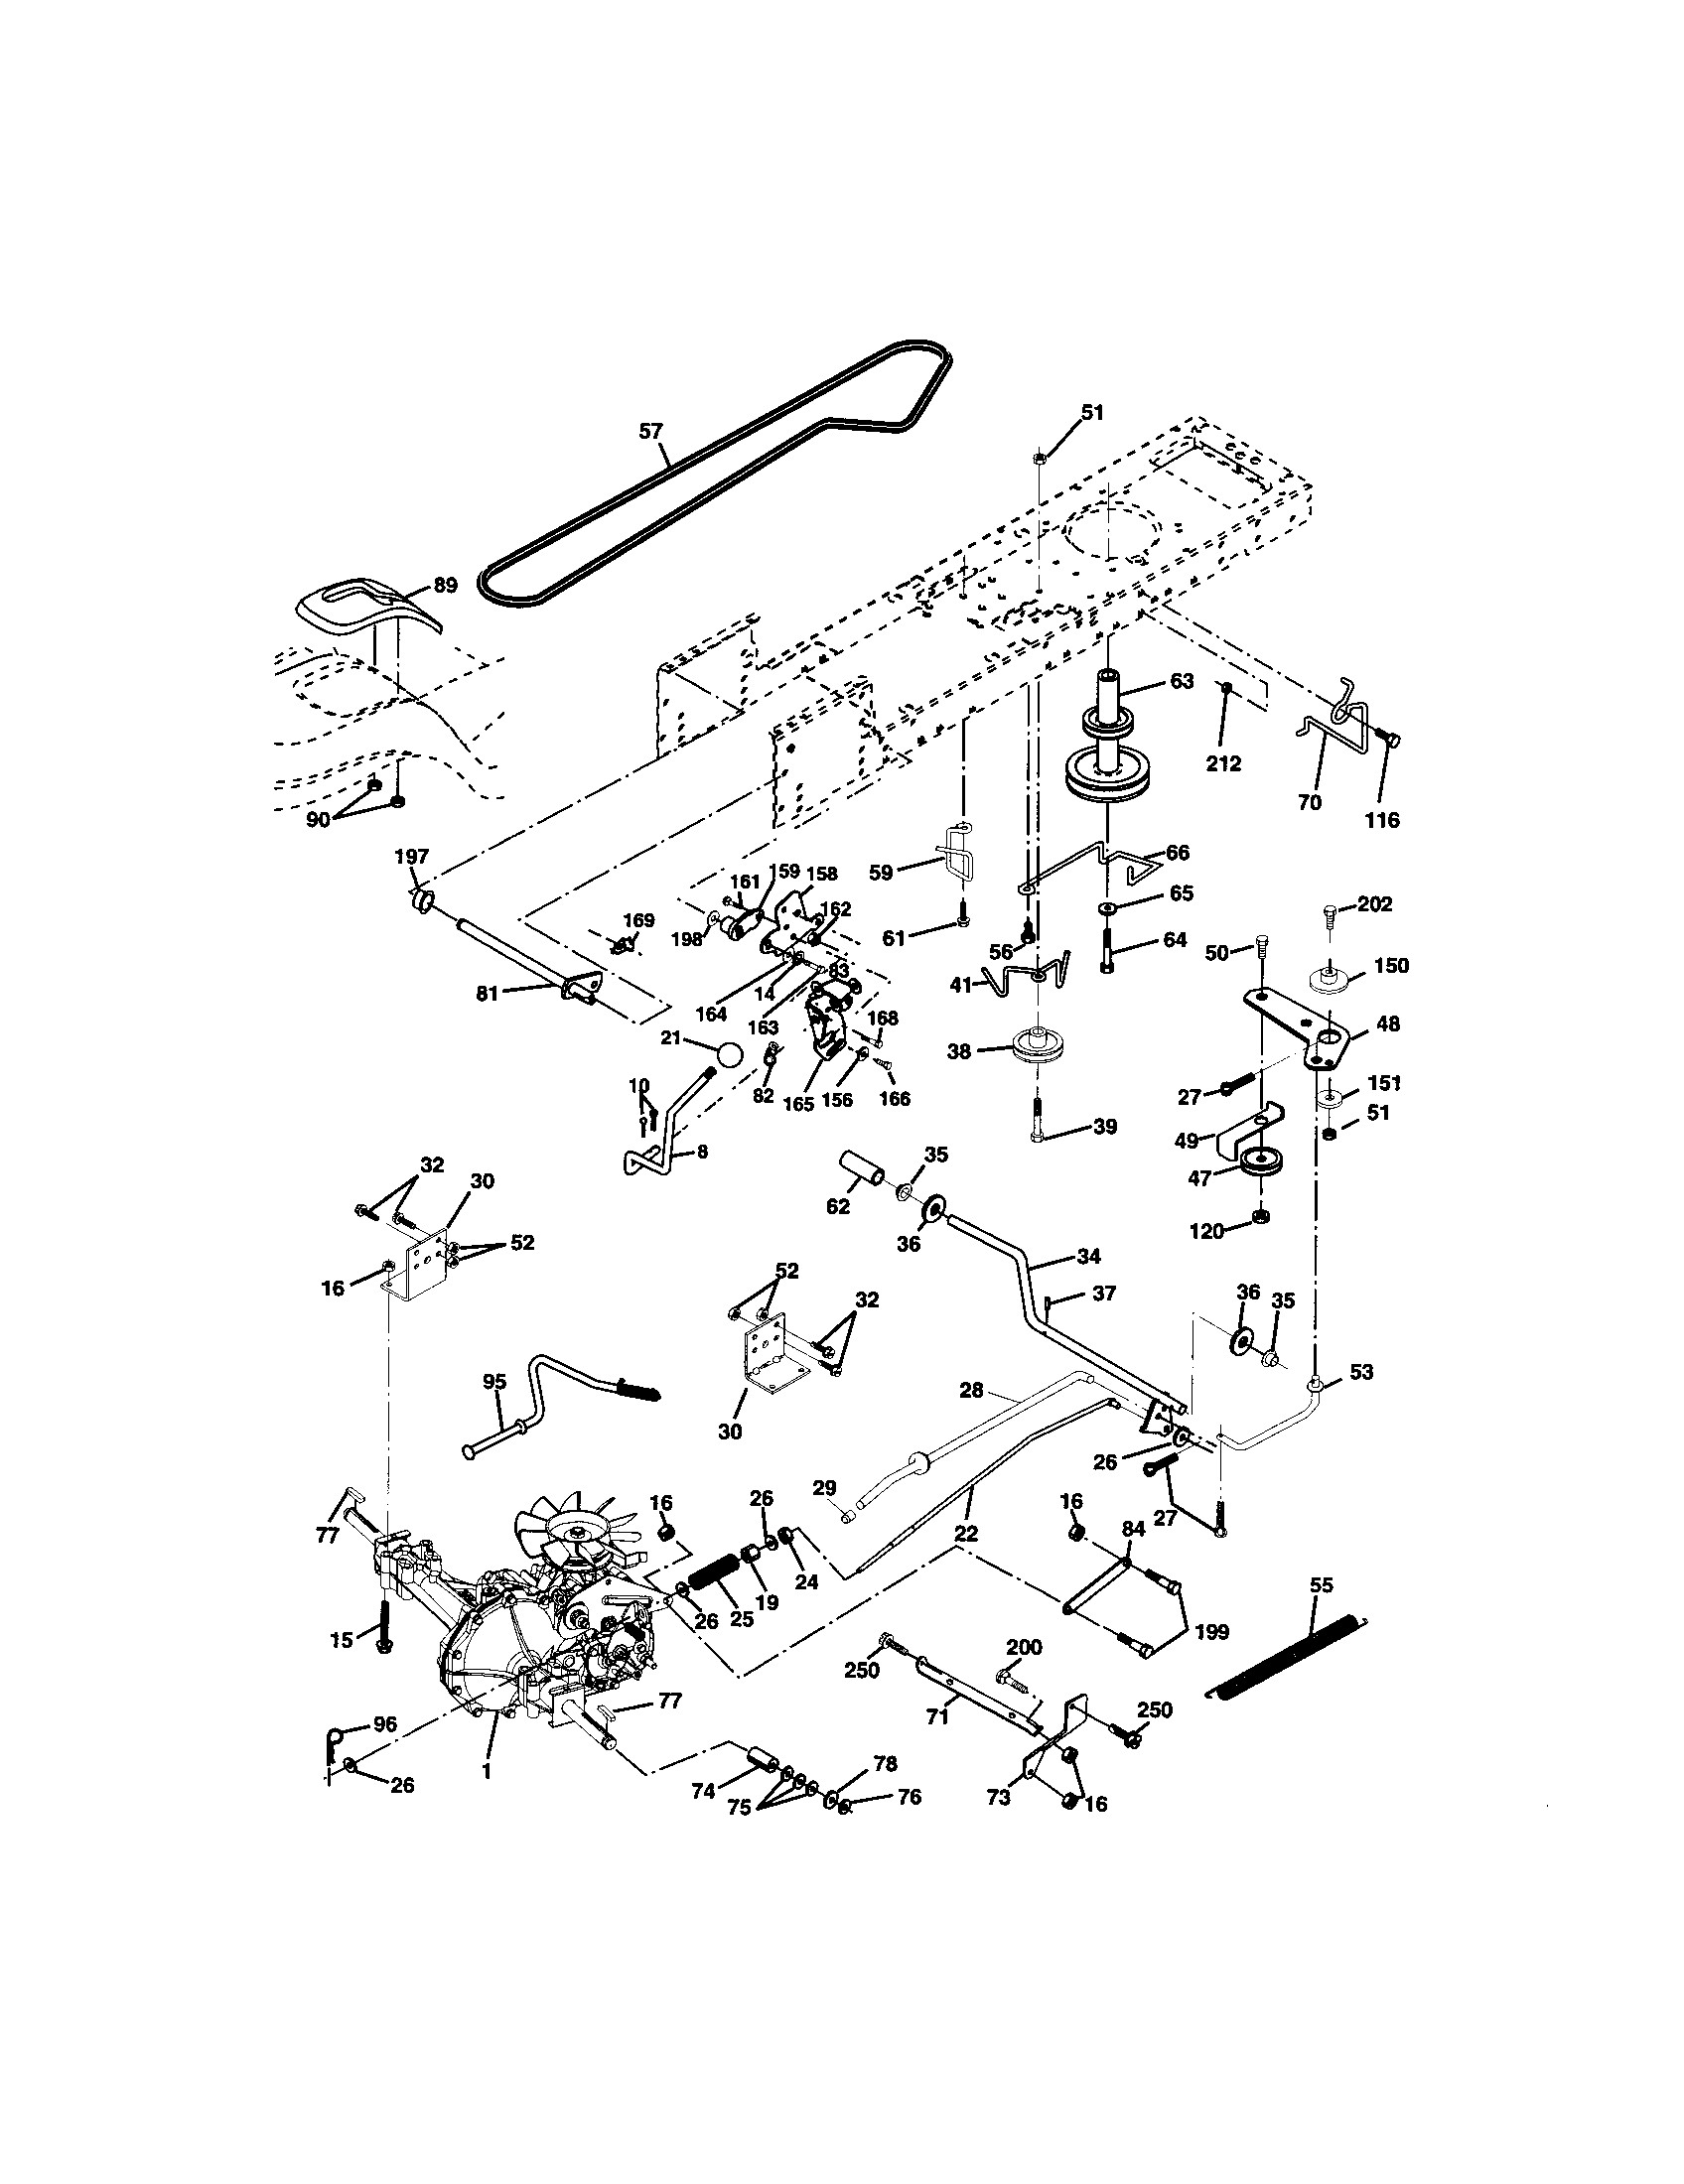 Craftsman Ltx 1000 Parts Diagram Looking for Craftsman Model Front Engine Lawn Tractor Of Craftsman Ltx 1000 Parts Diagram